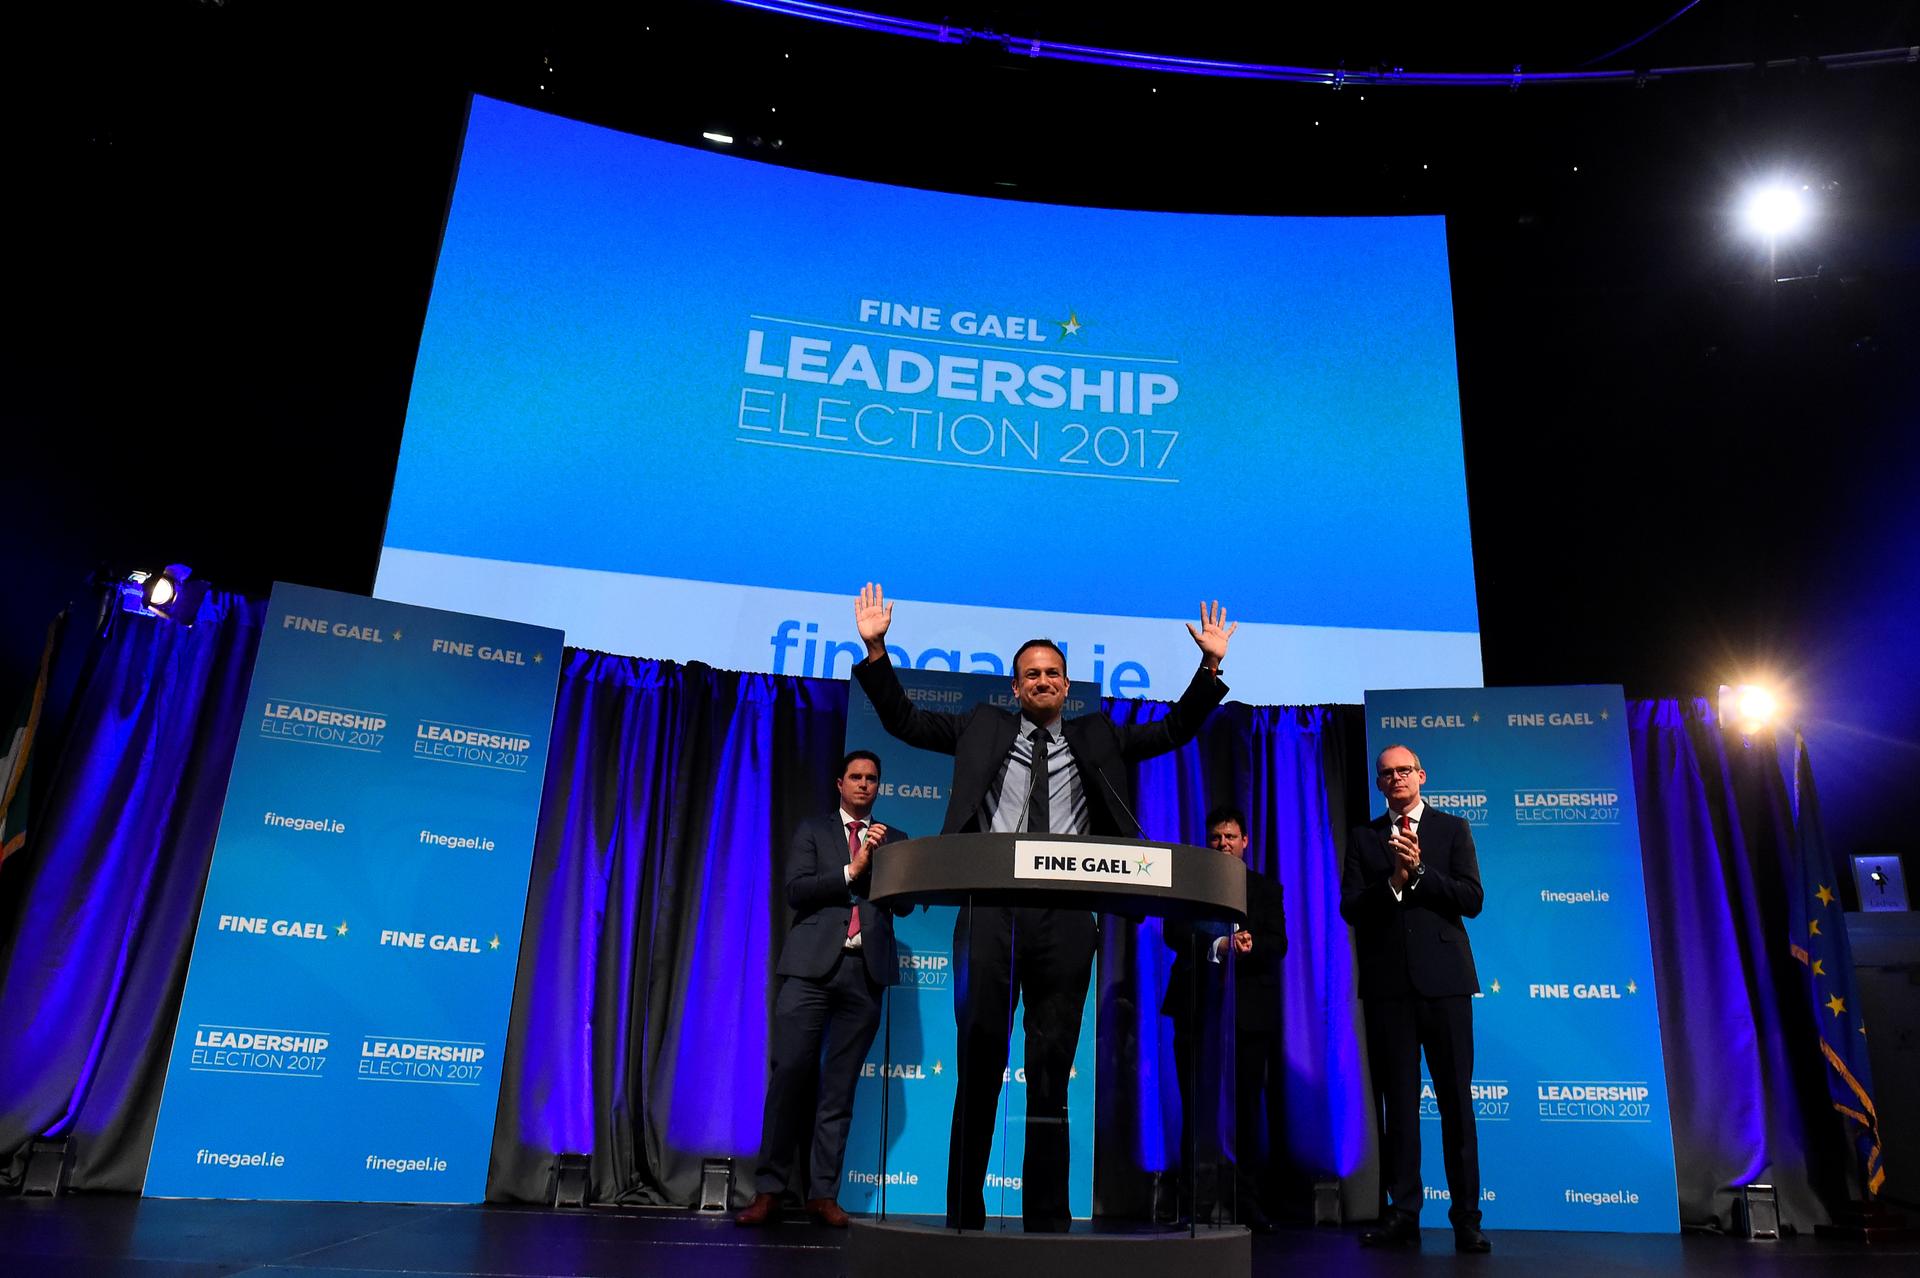 Leo Varadkar wins the Fine Gael parliamentary elections